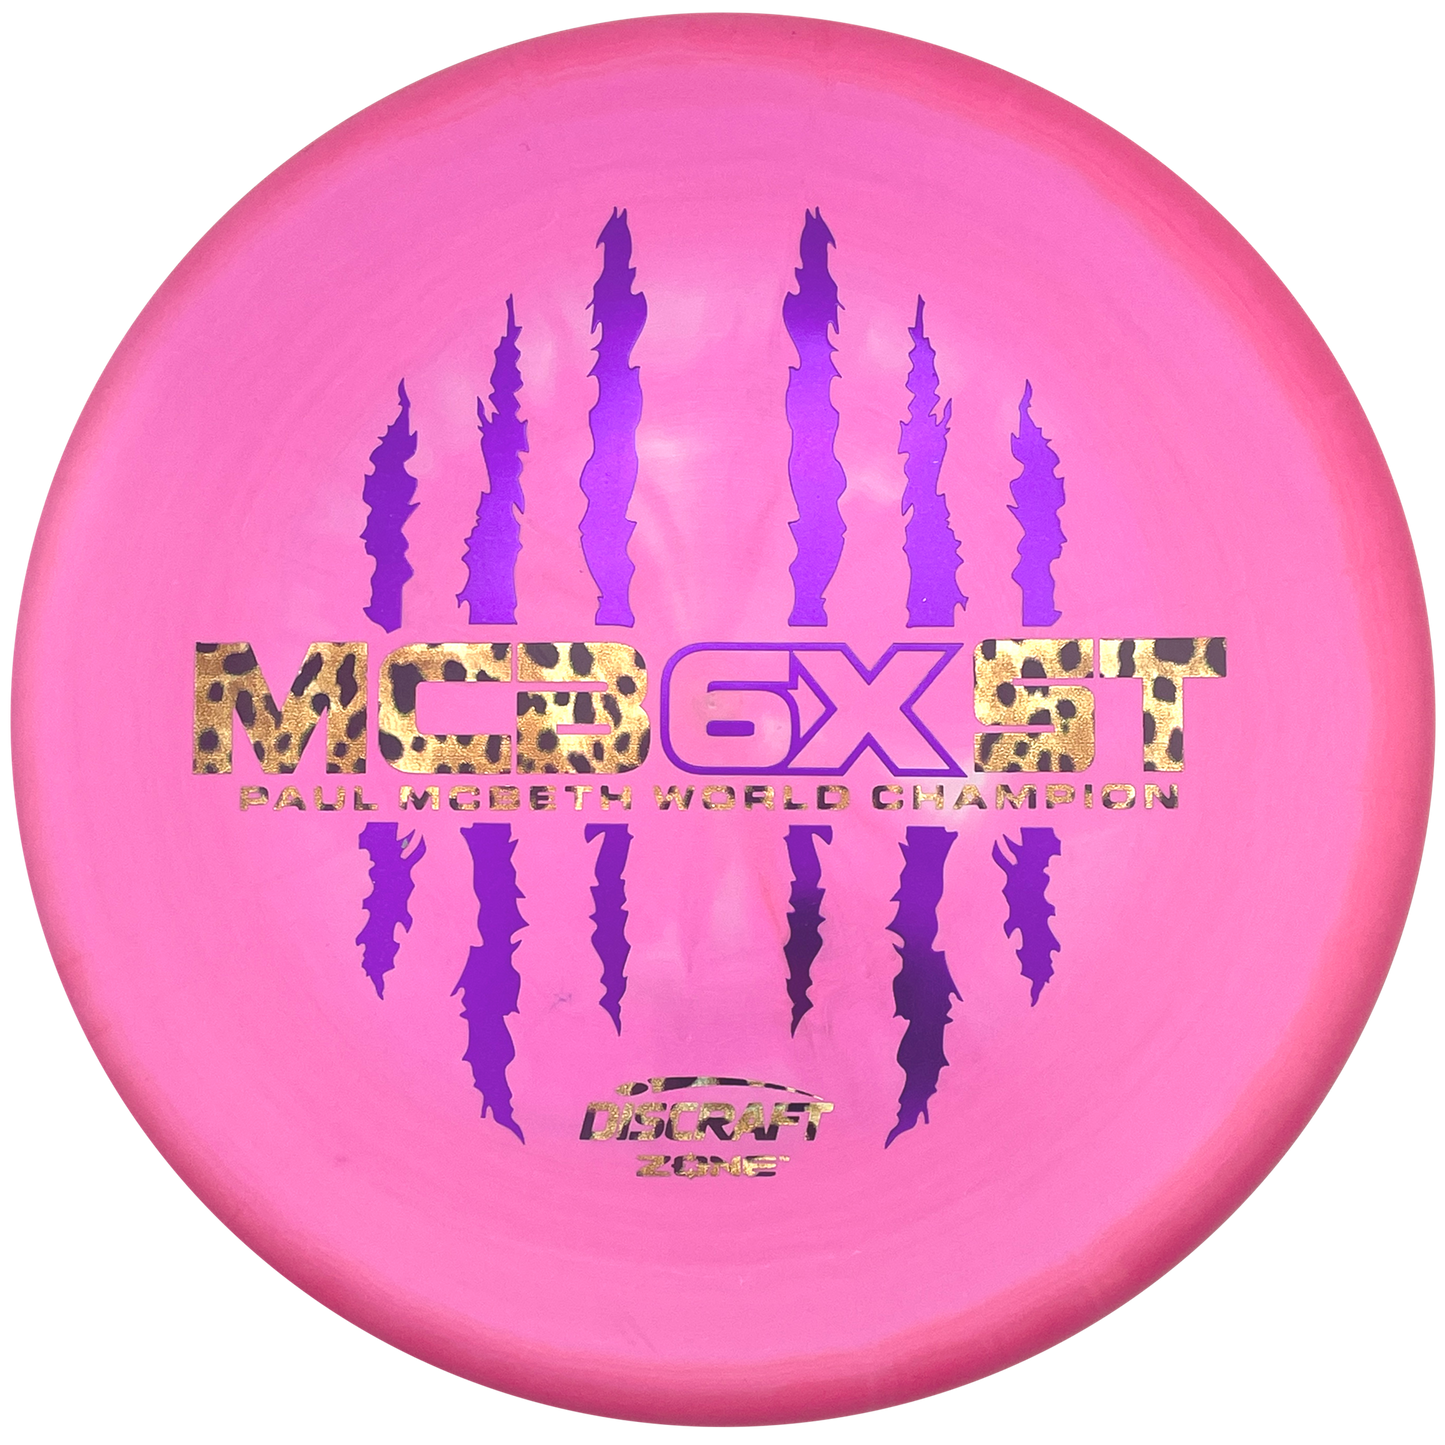 Discraft Zone - 6x Paul McBeth - ESP - Swirly Pink